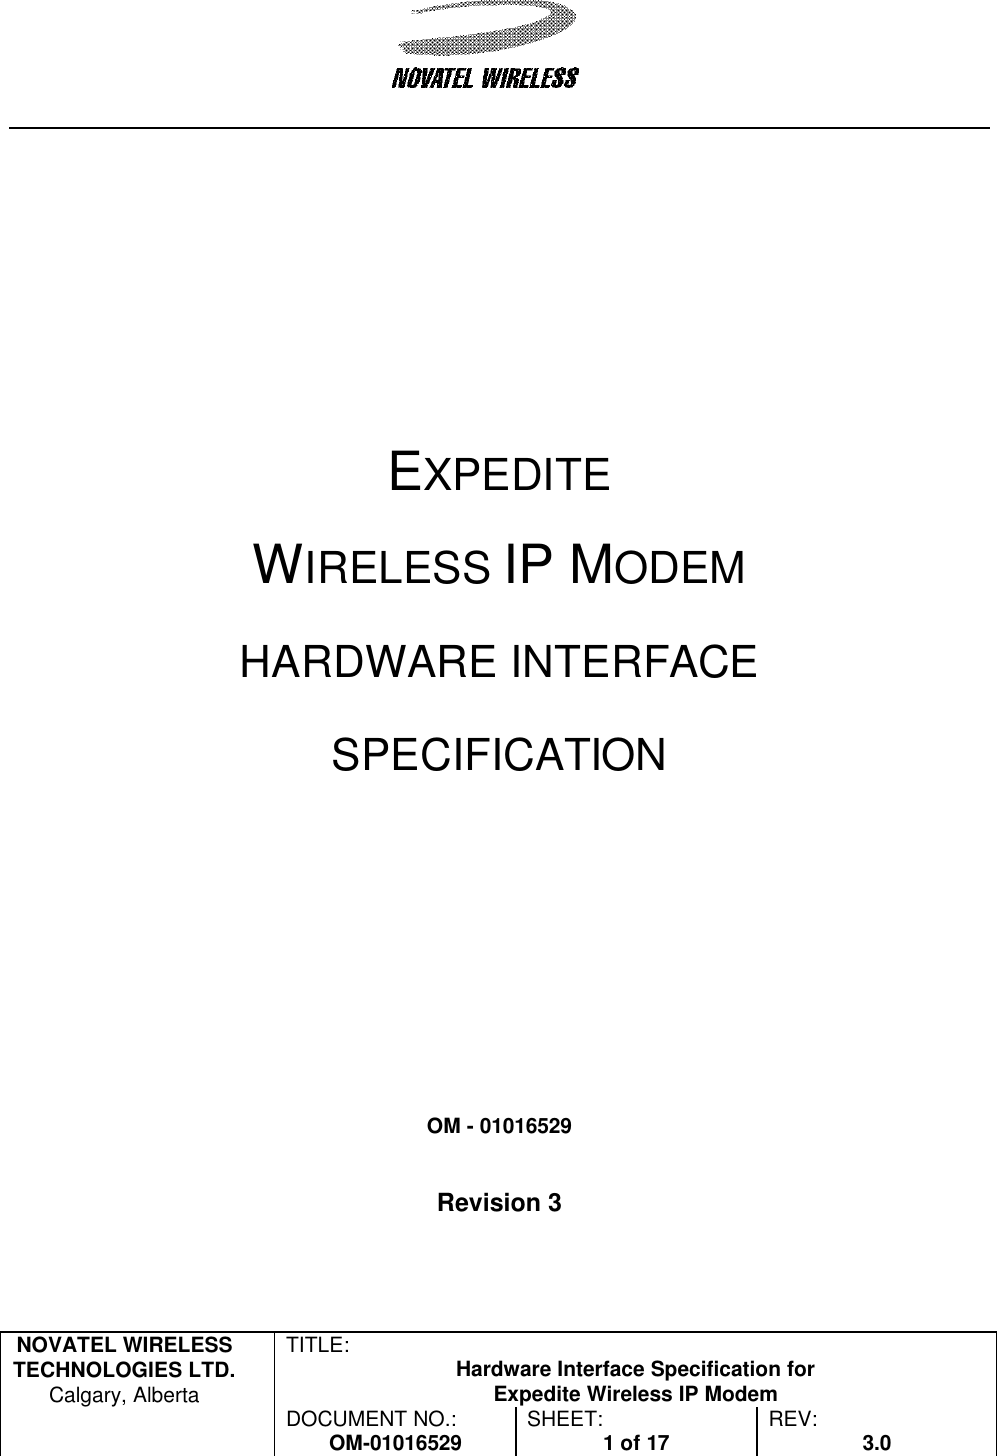   NOVATEL WIRELESS TECHNOLOGIES LTD.  Calgary, Alberta TITLE: Hardware Interface Specification for Expedite Wireless IP Modem  DOCUMENT NO.: OM-01016529 SHEET: 1 of 17 REV: 3.0       EXPEDITE  WIRELESS IP MODEM HARDWARE INTERFACE  SPECIFICATION              OM - 01016529   Revision 3  